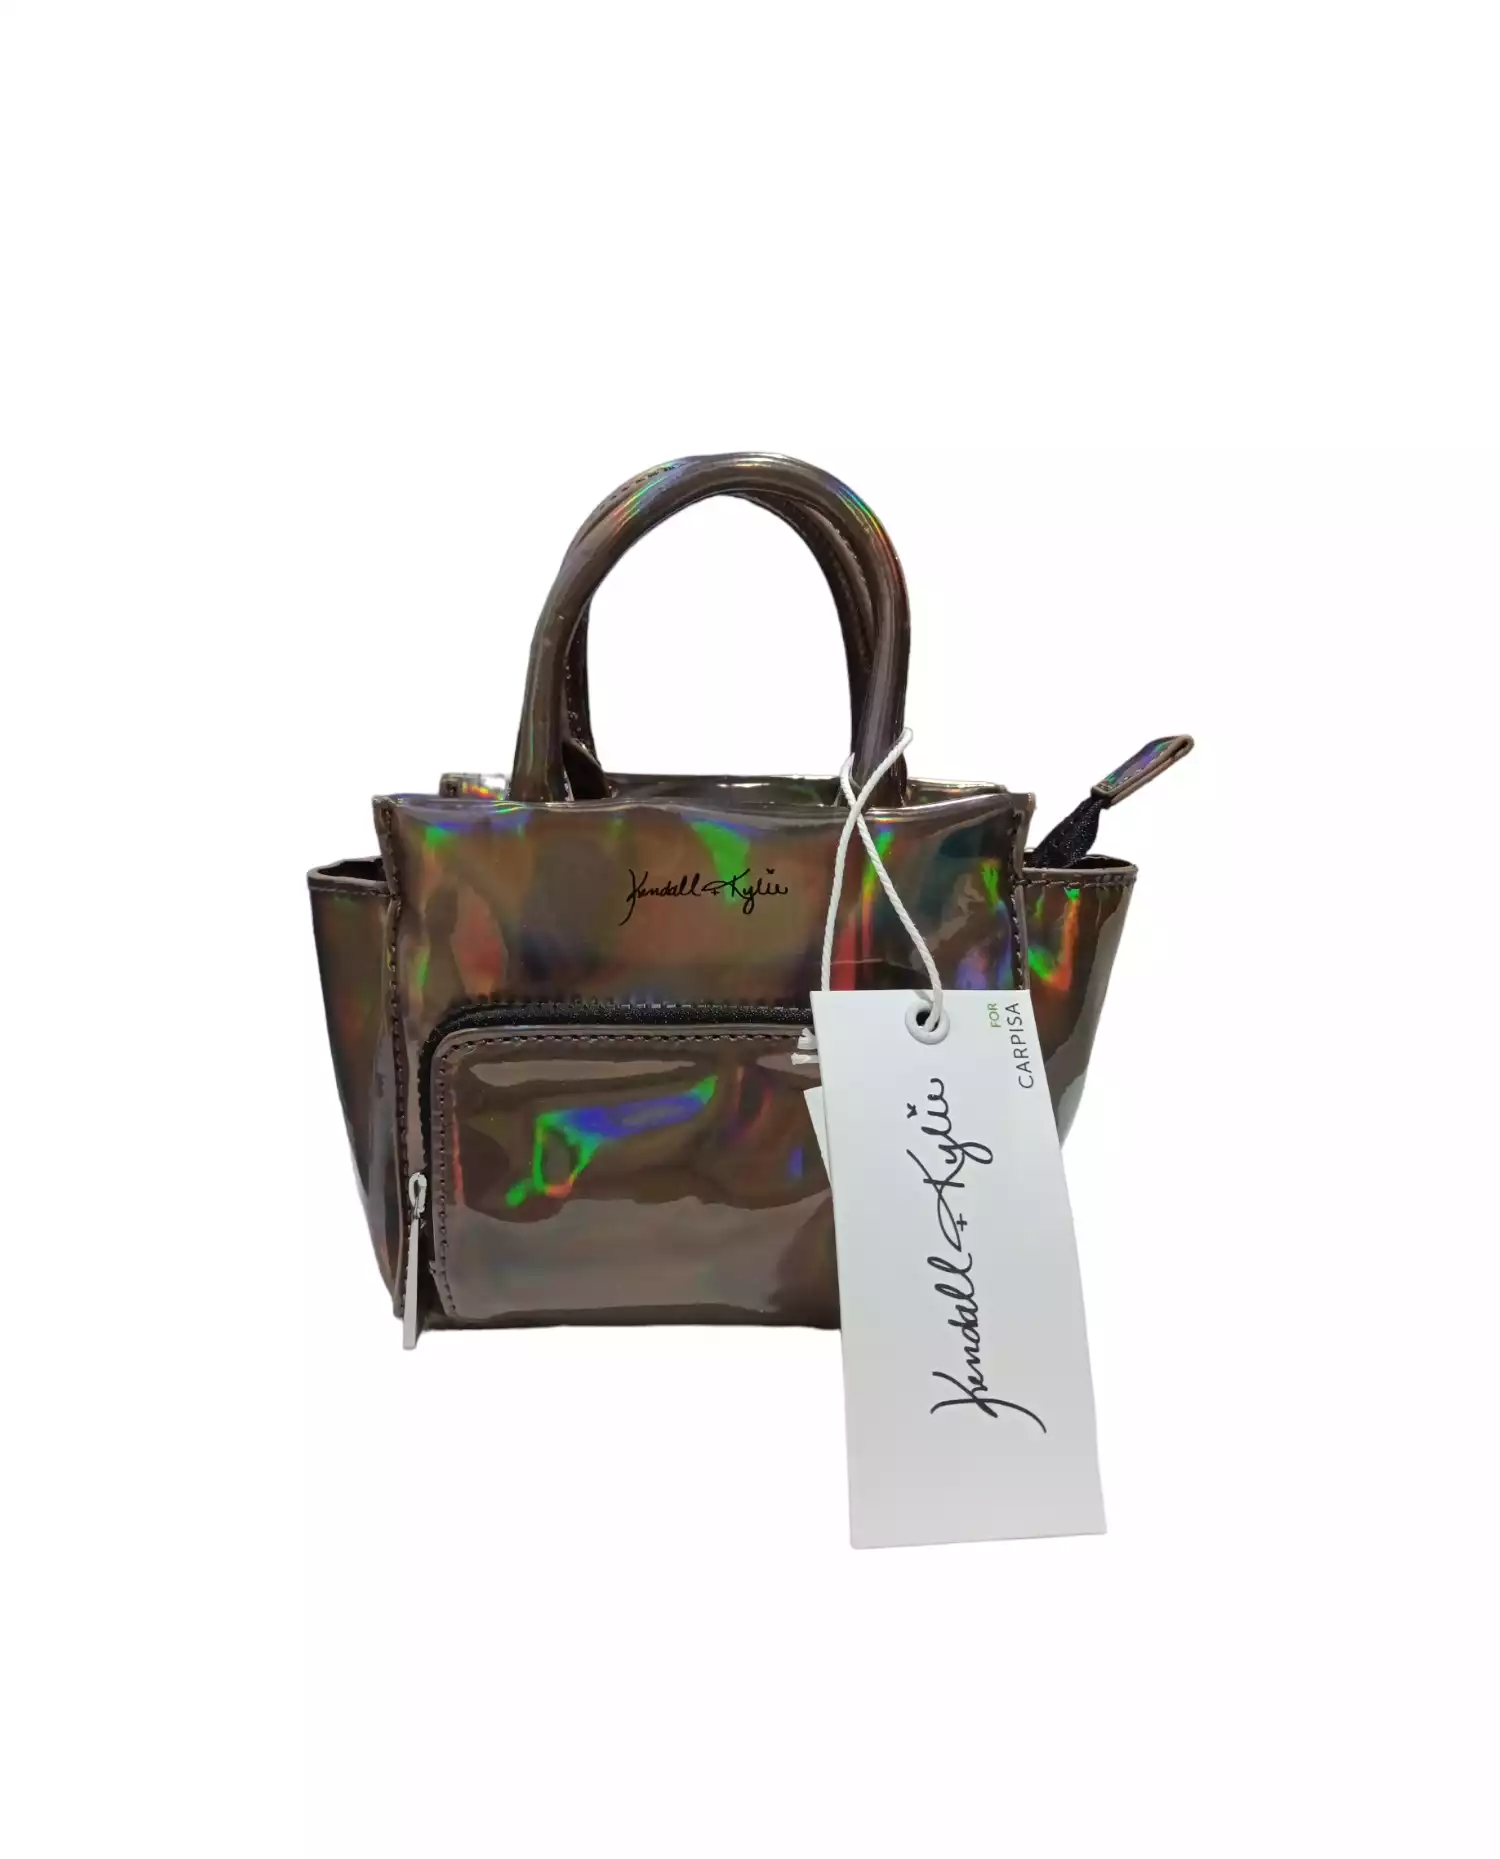 Handbag by Kendall+Kylie for Carpisa